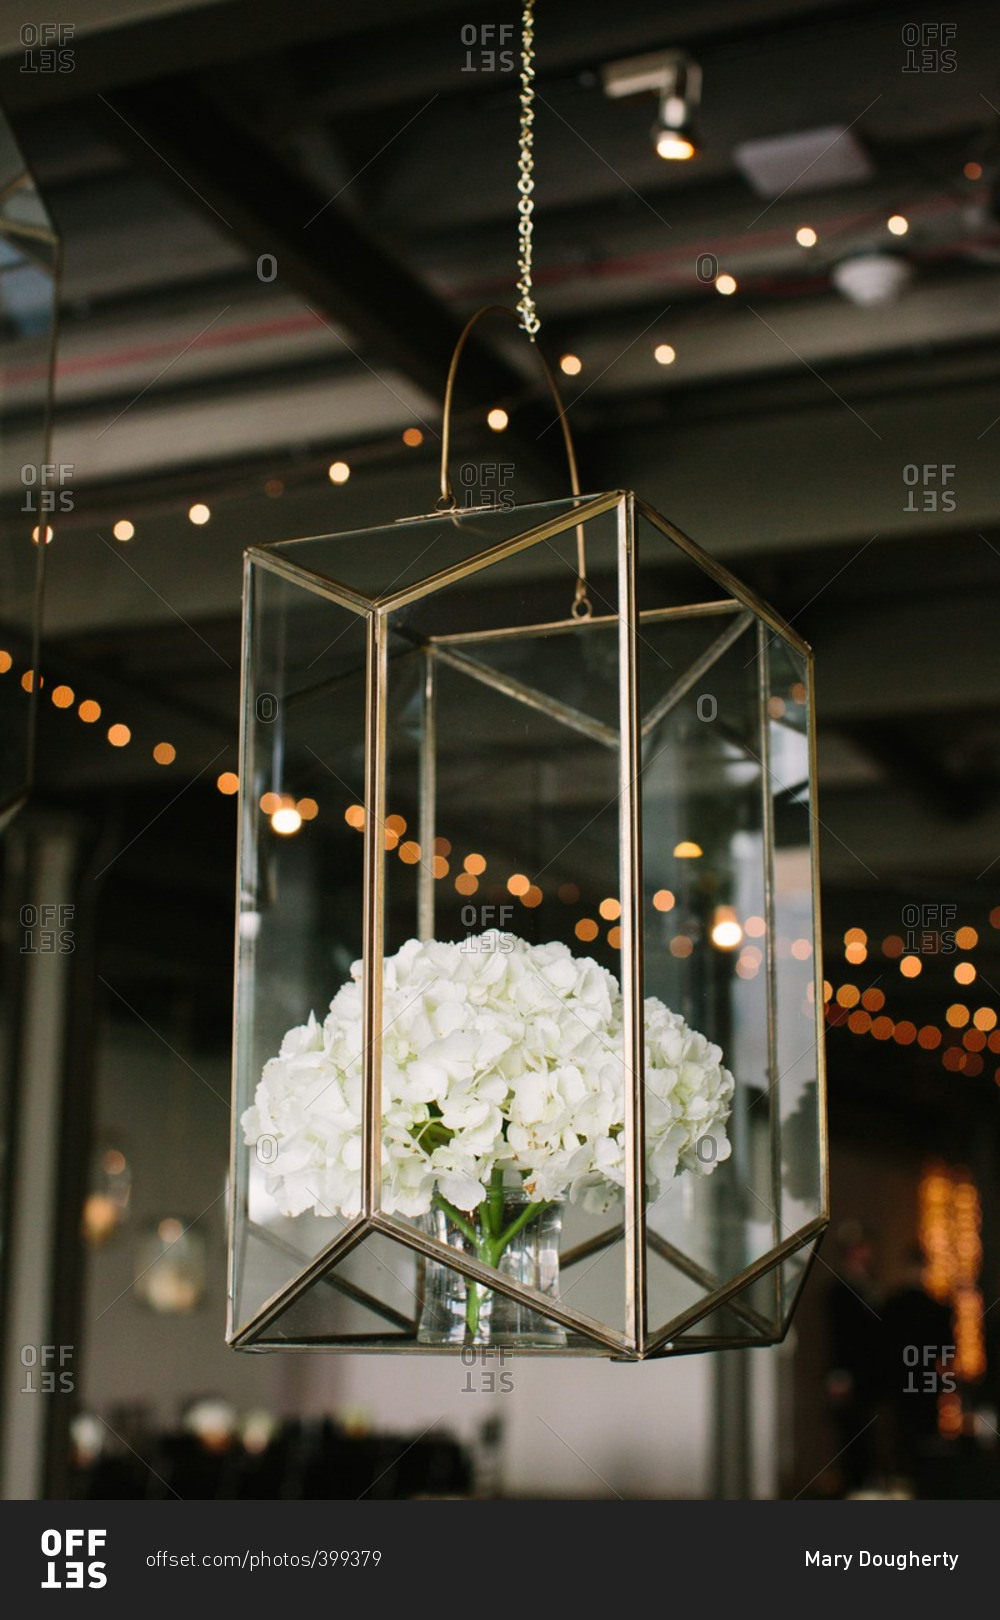 White hydrangea arrangement in hanging glass box